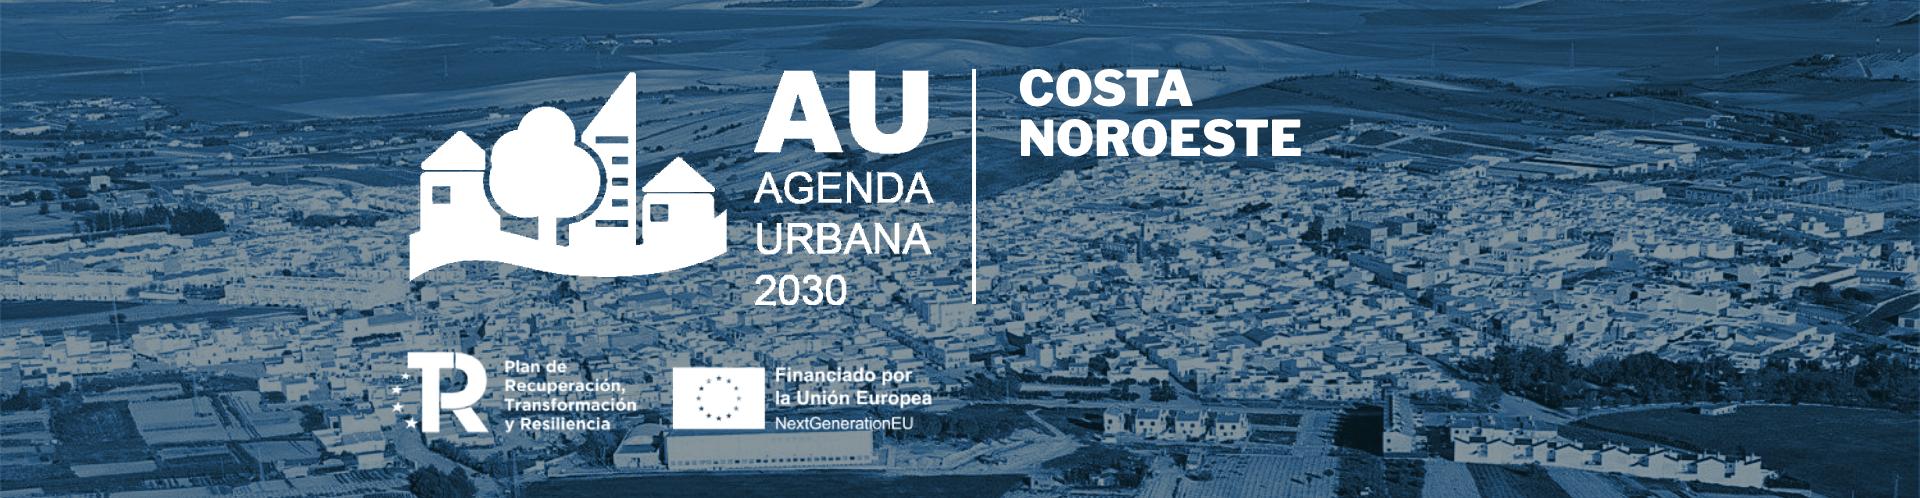 Agenda Urbana 2030 Costa Noroeste